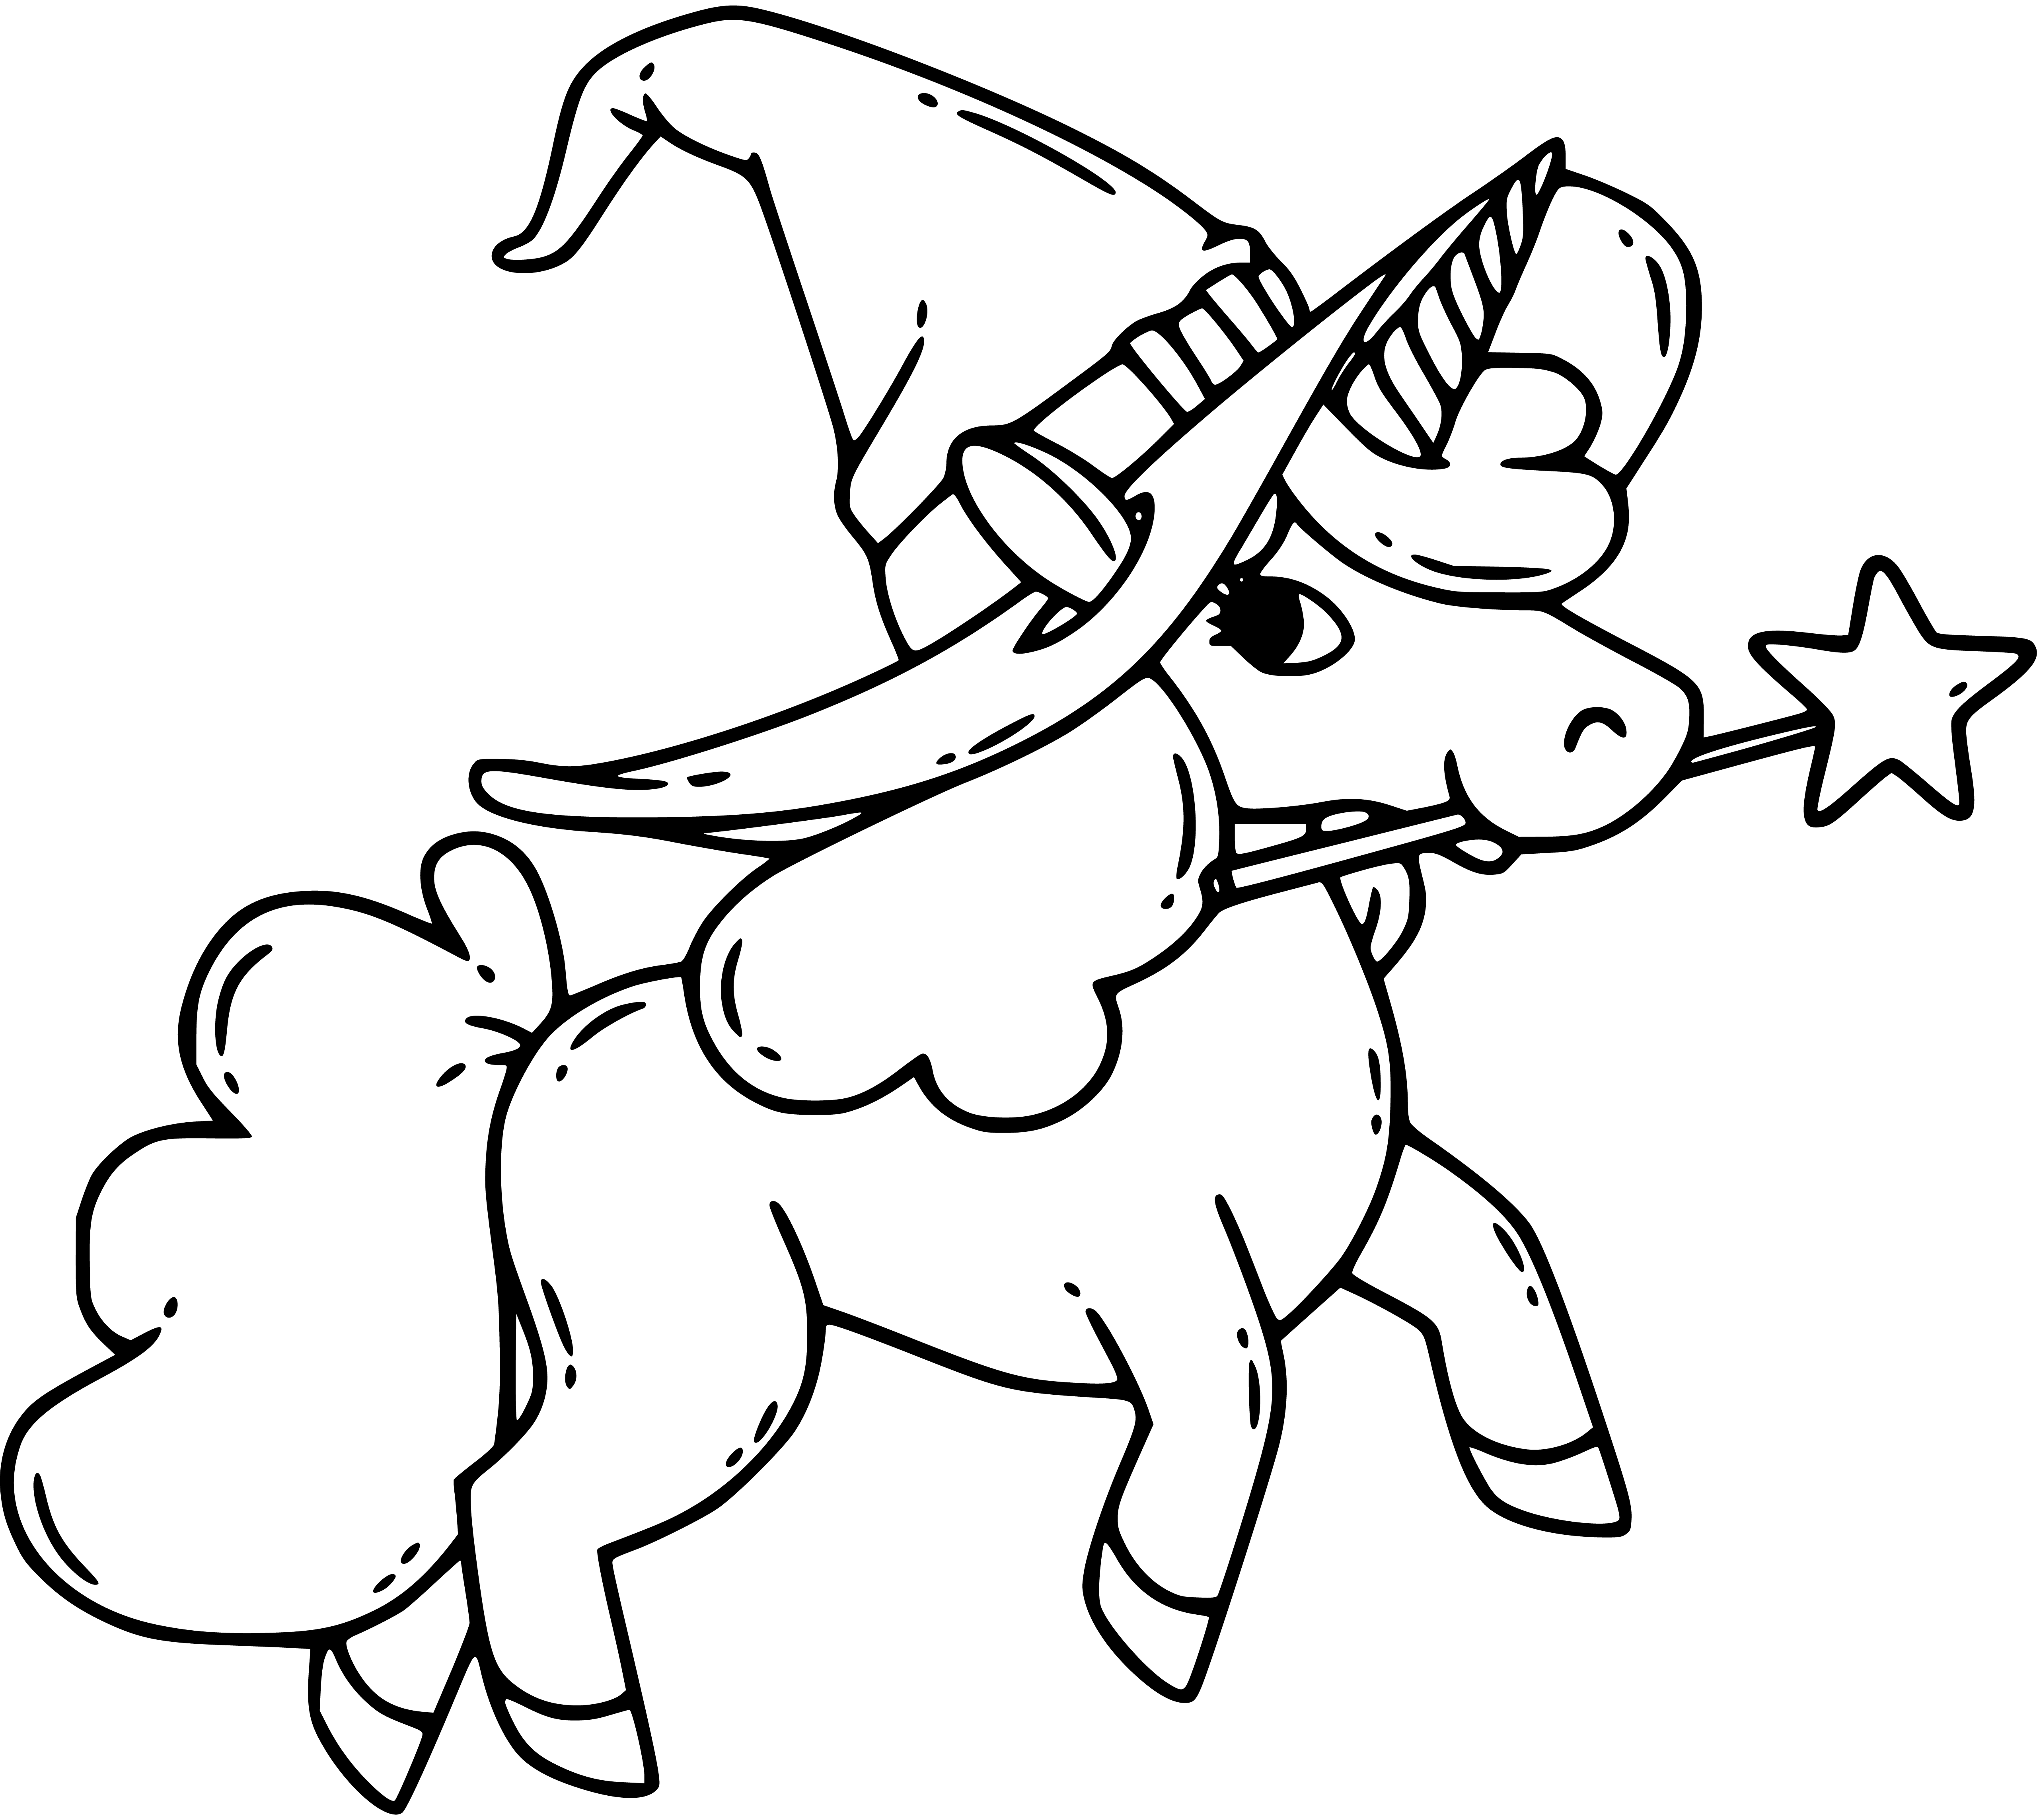 Magic Unicorn Coloring Pages for Kids - SheetalColor.com